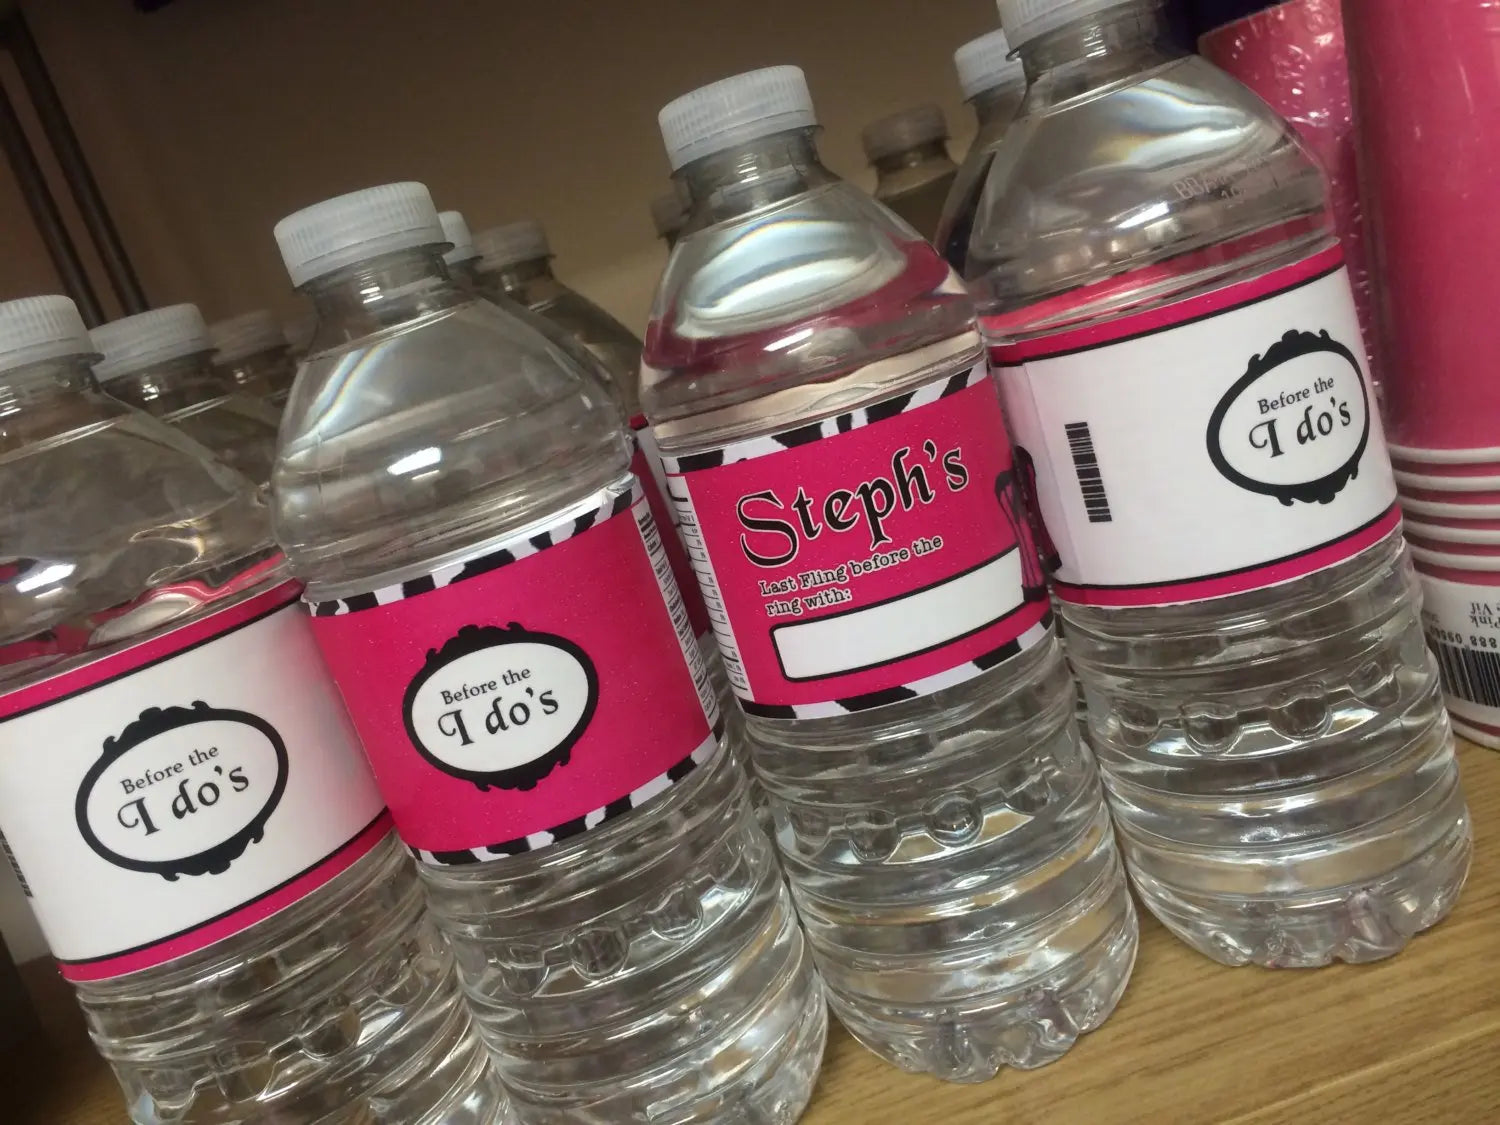 Hot Pink and Black Bridal Shower, Stagette, Hen Party Water Bottle Label 24 pieces or DIGITAL